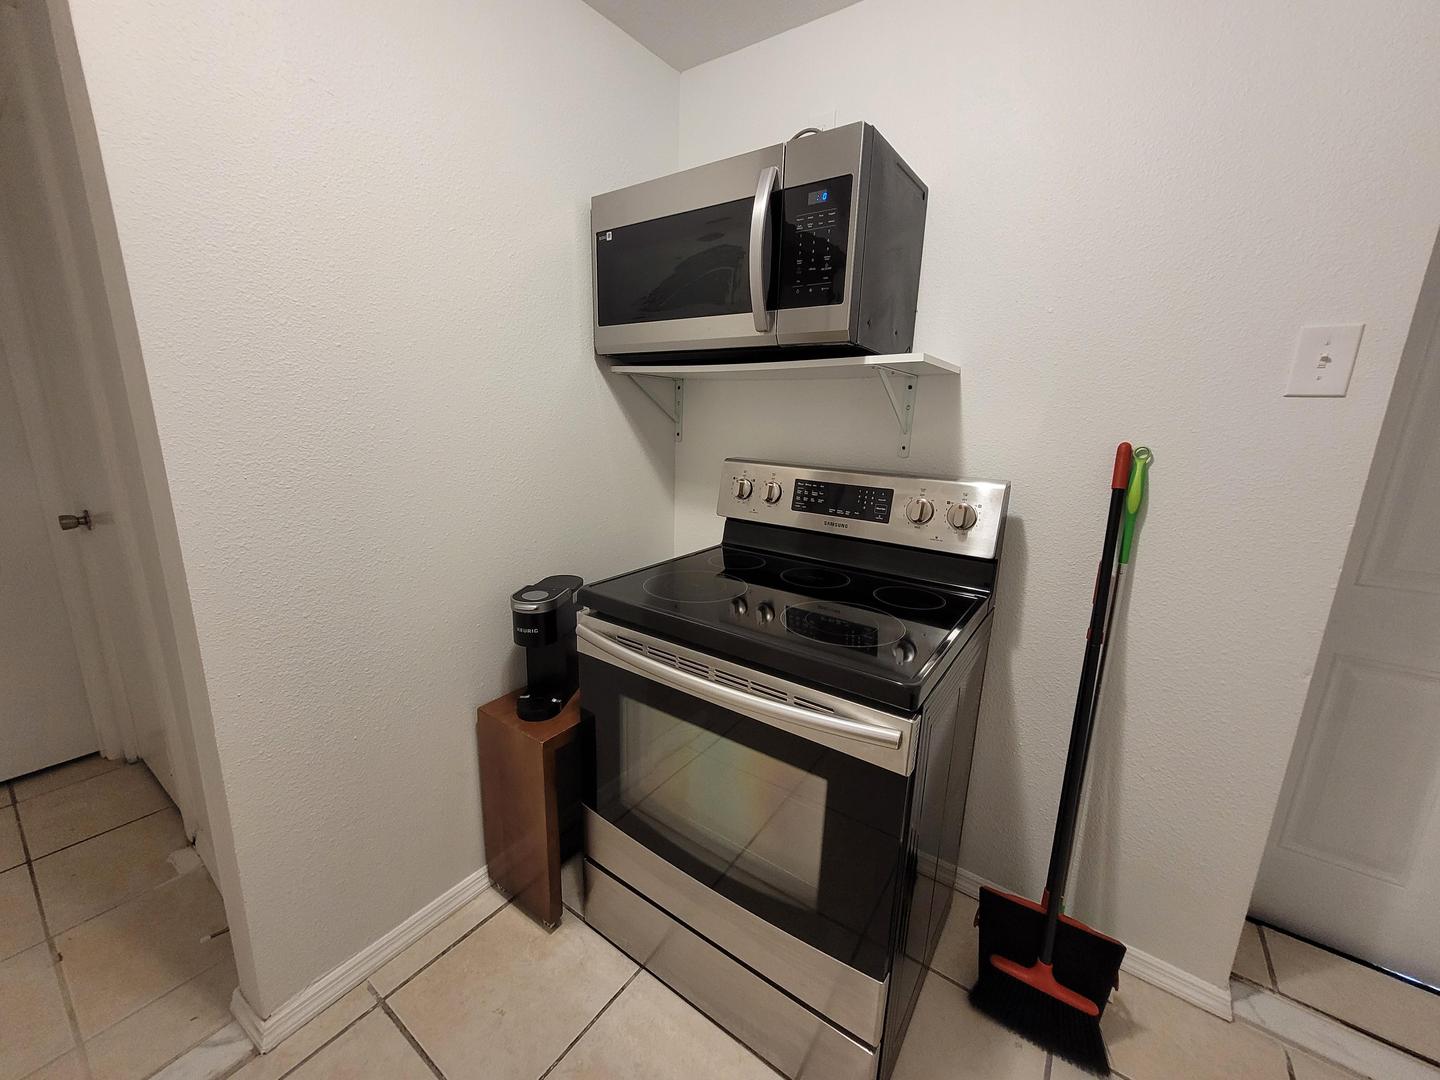 Back unit kitchen for room 6 & 7. 
*No refrigerator *